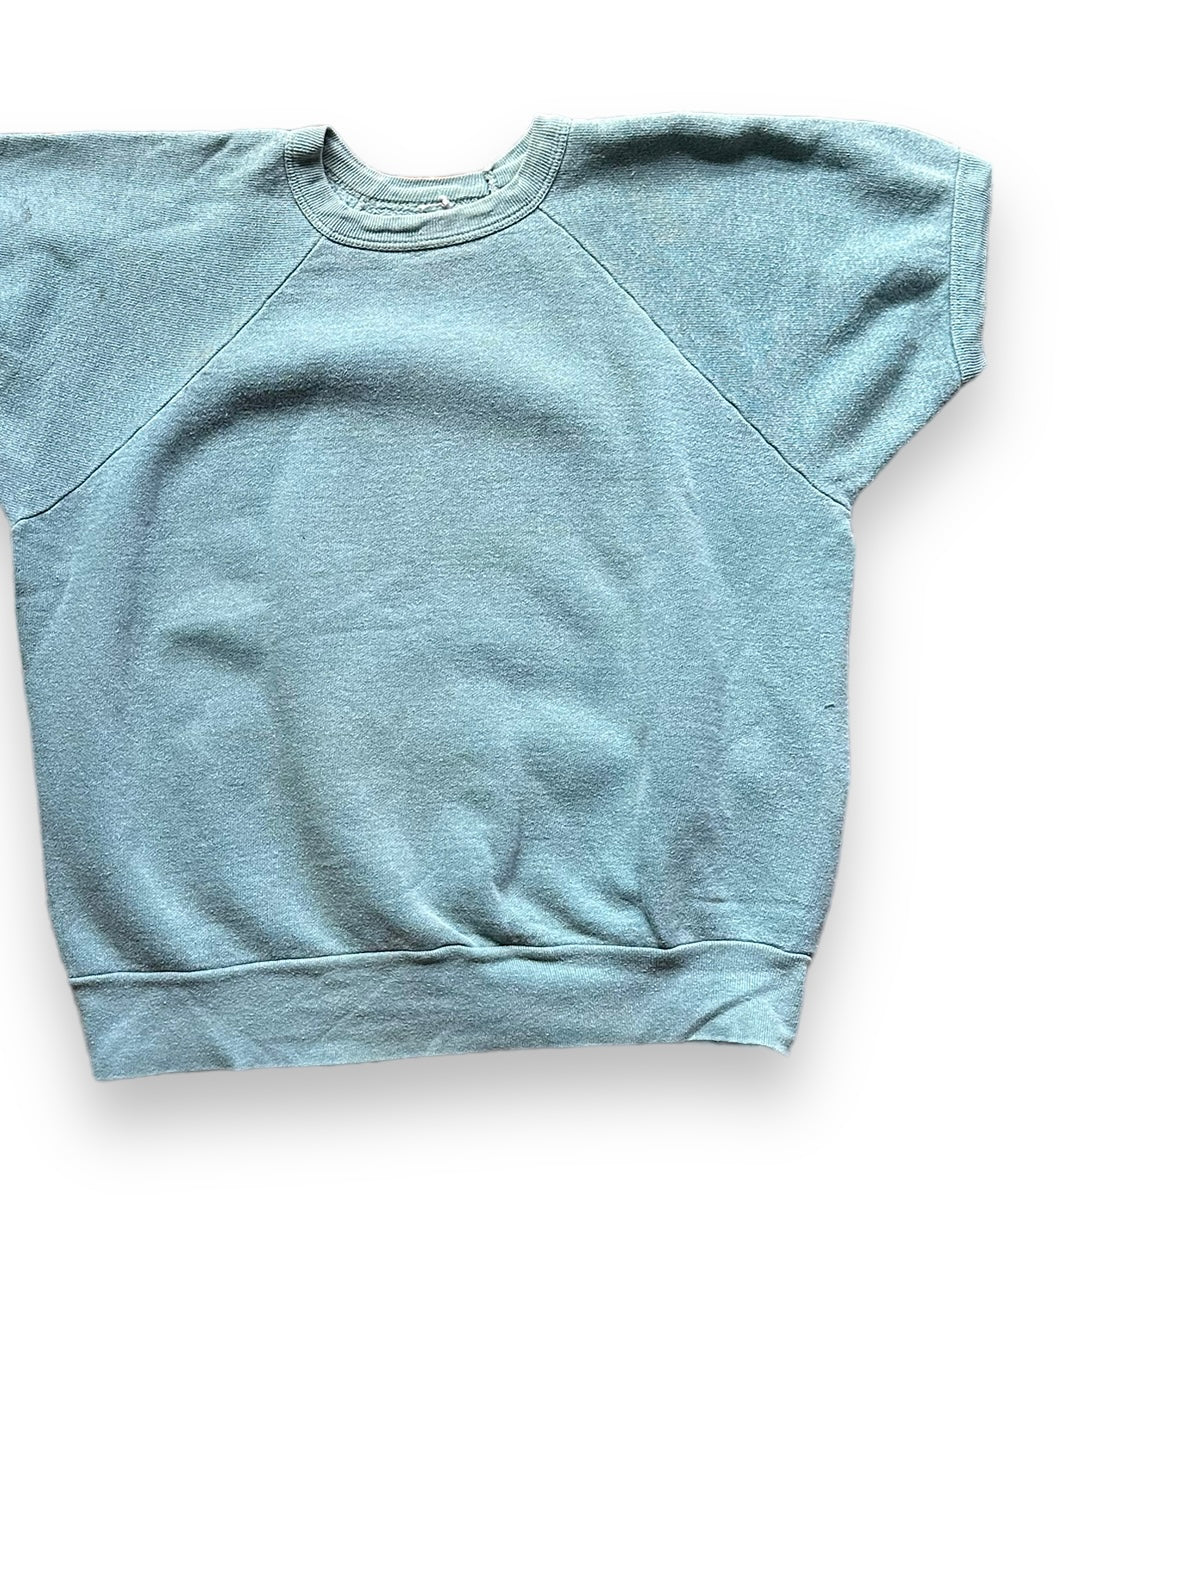 Front Left View of Vintage Pale Green Short Sleeve Crewneck Sweatshirt SZ M | Barn Owl Vintage Clothing | Seattle Vintage Sweatshirts